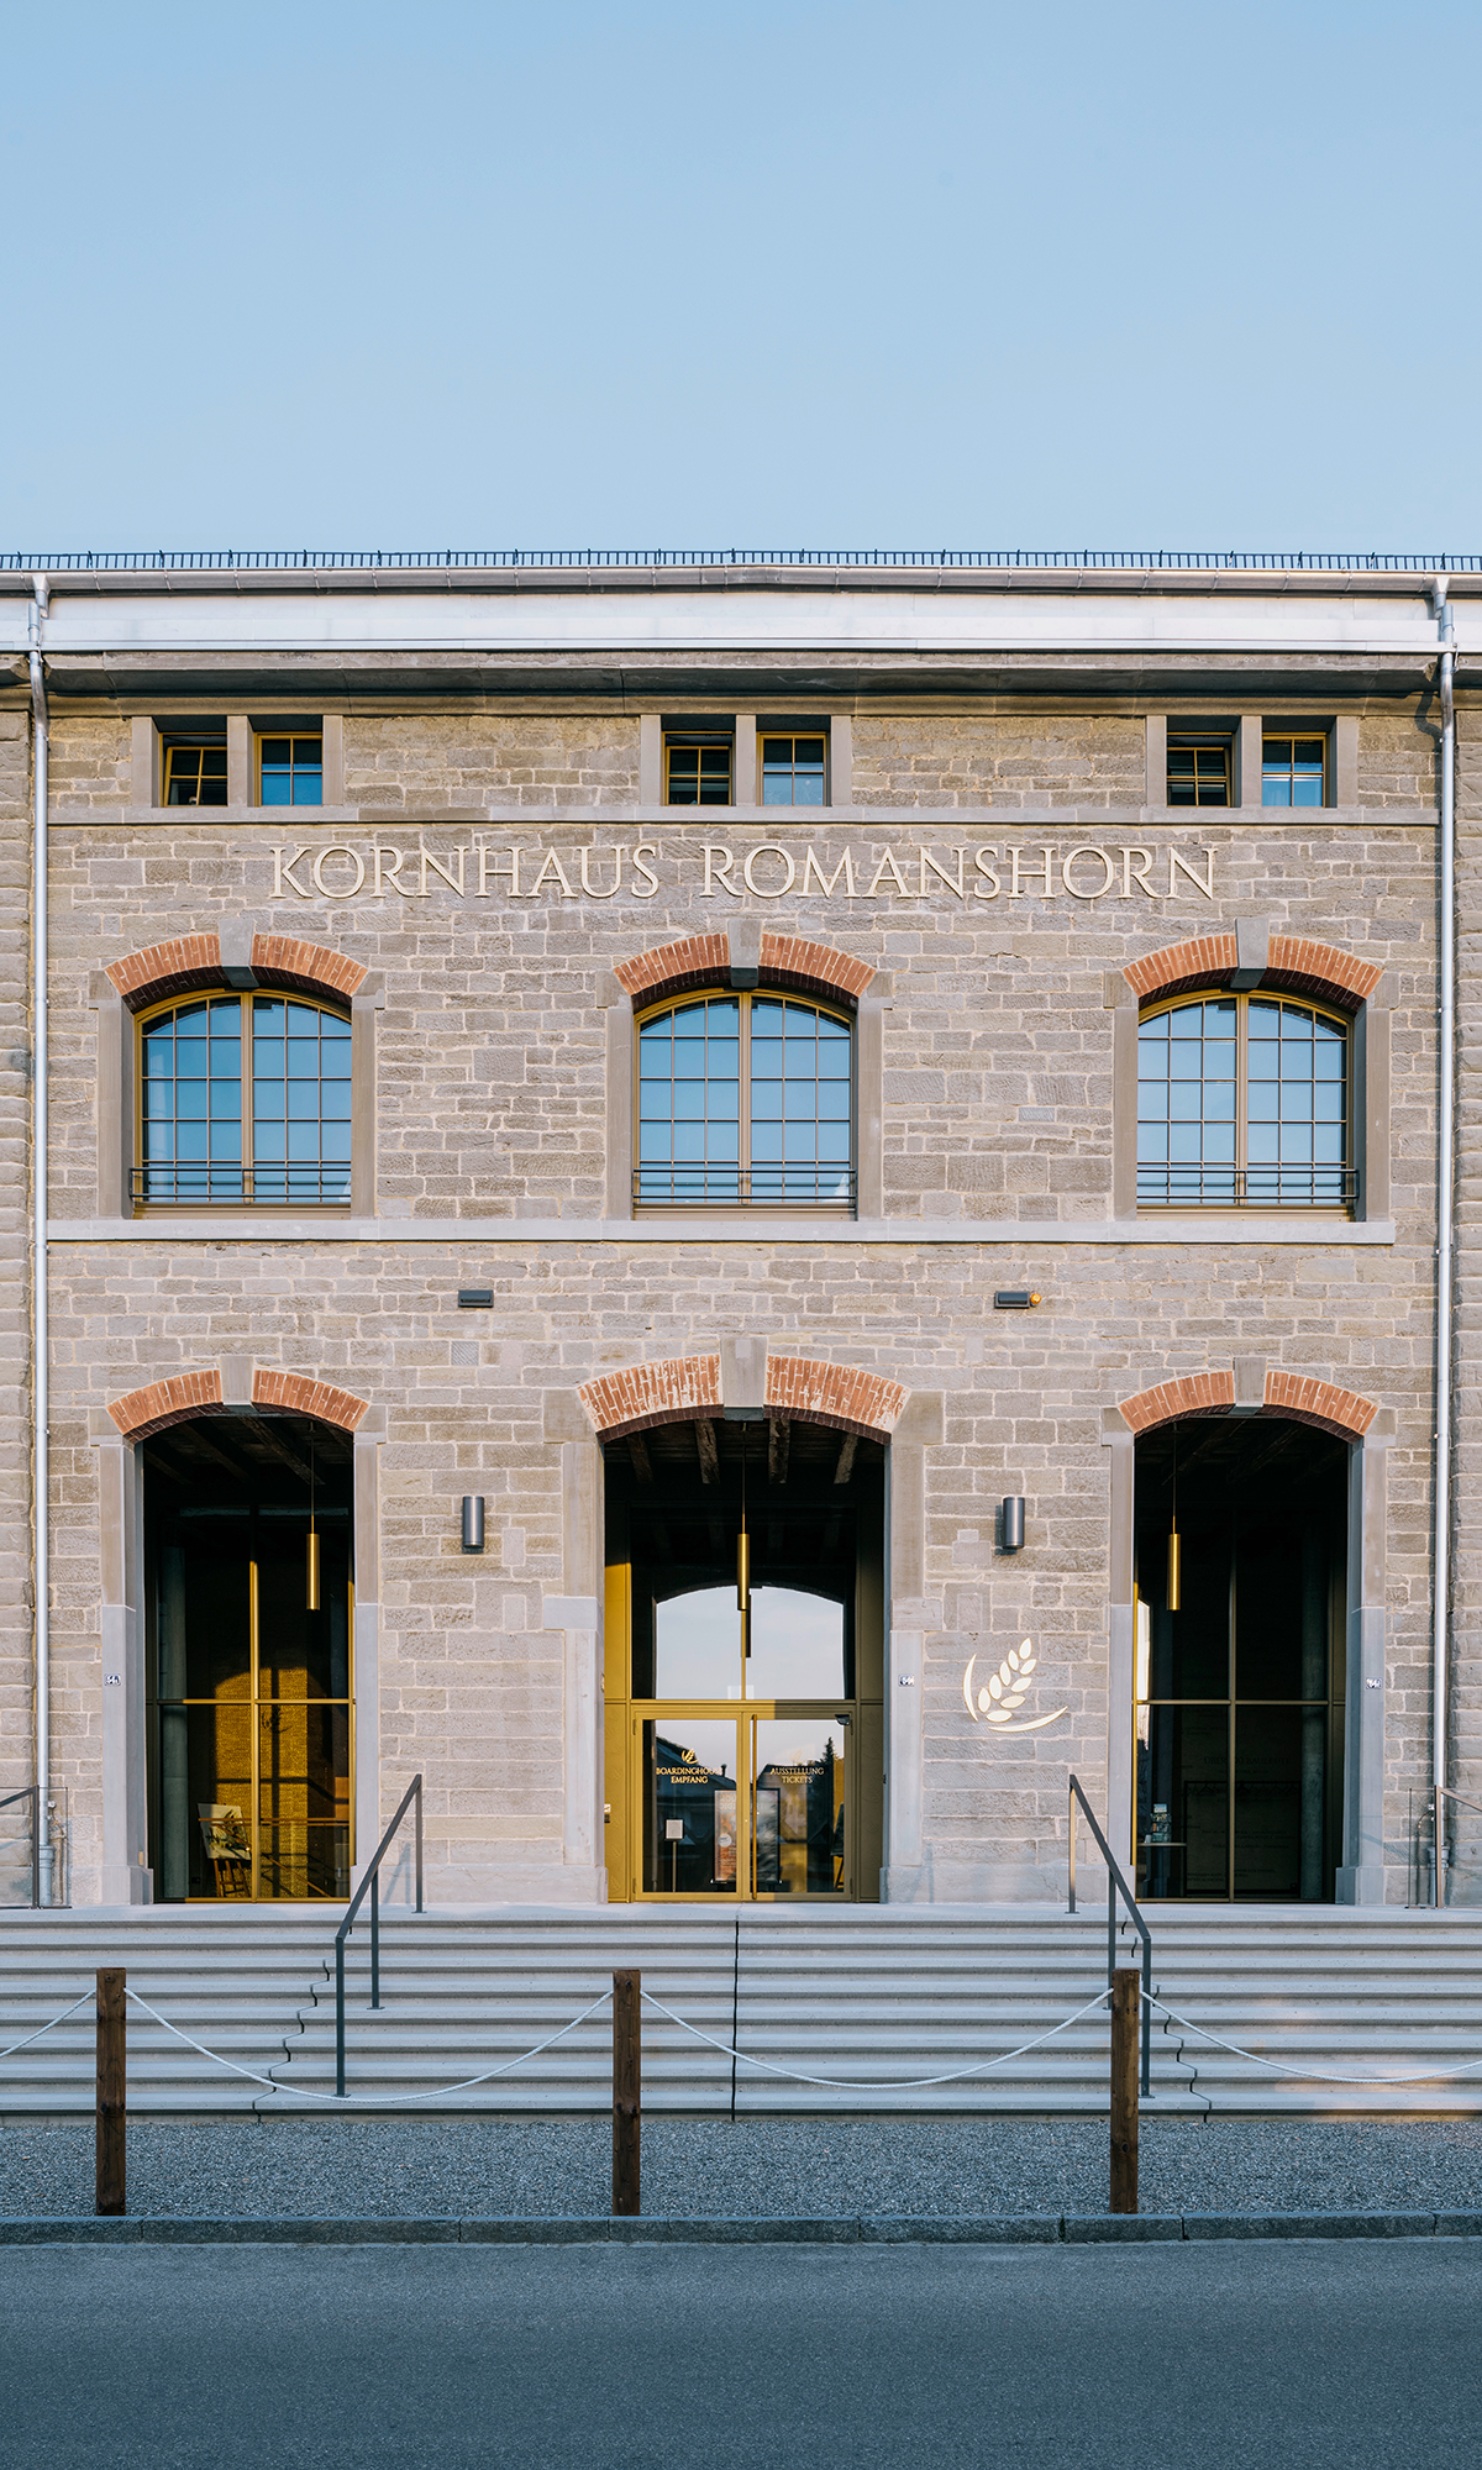 Entrance of the Kornhaus with historical facade